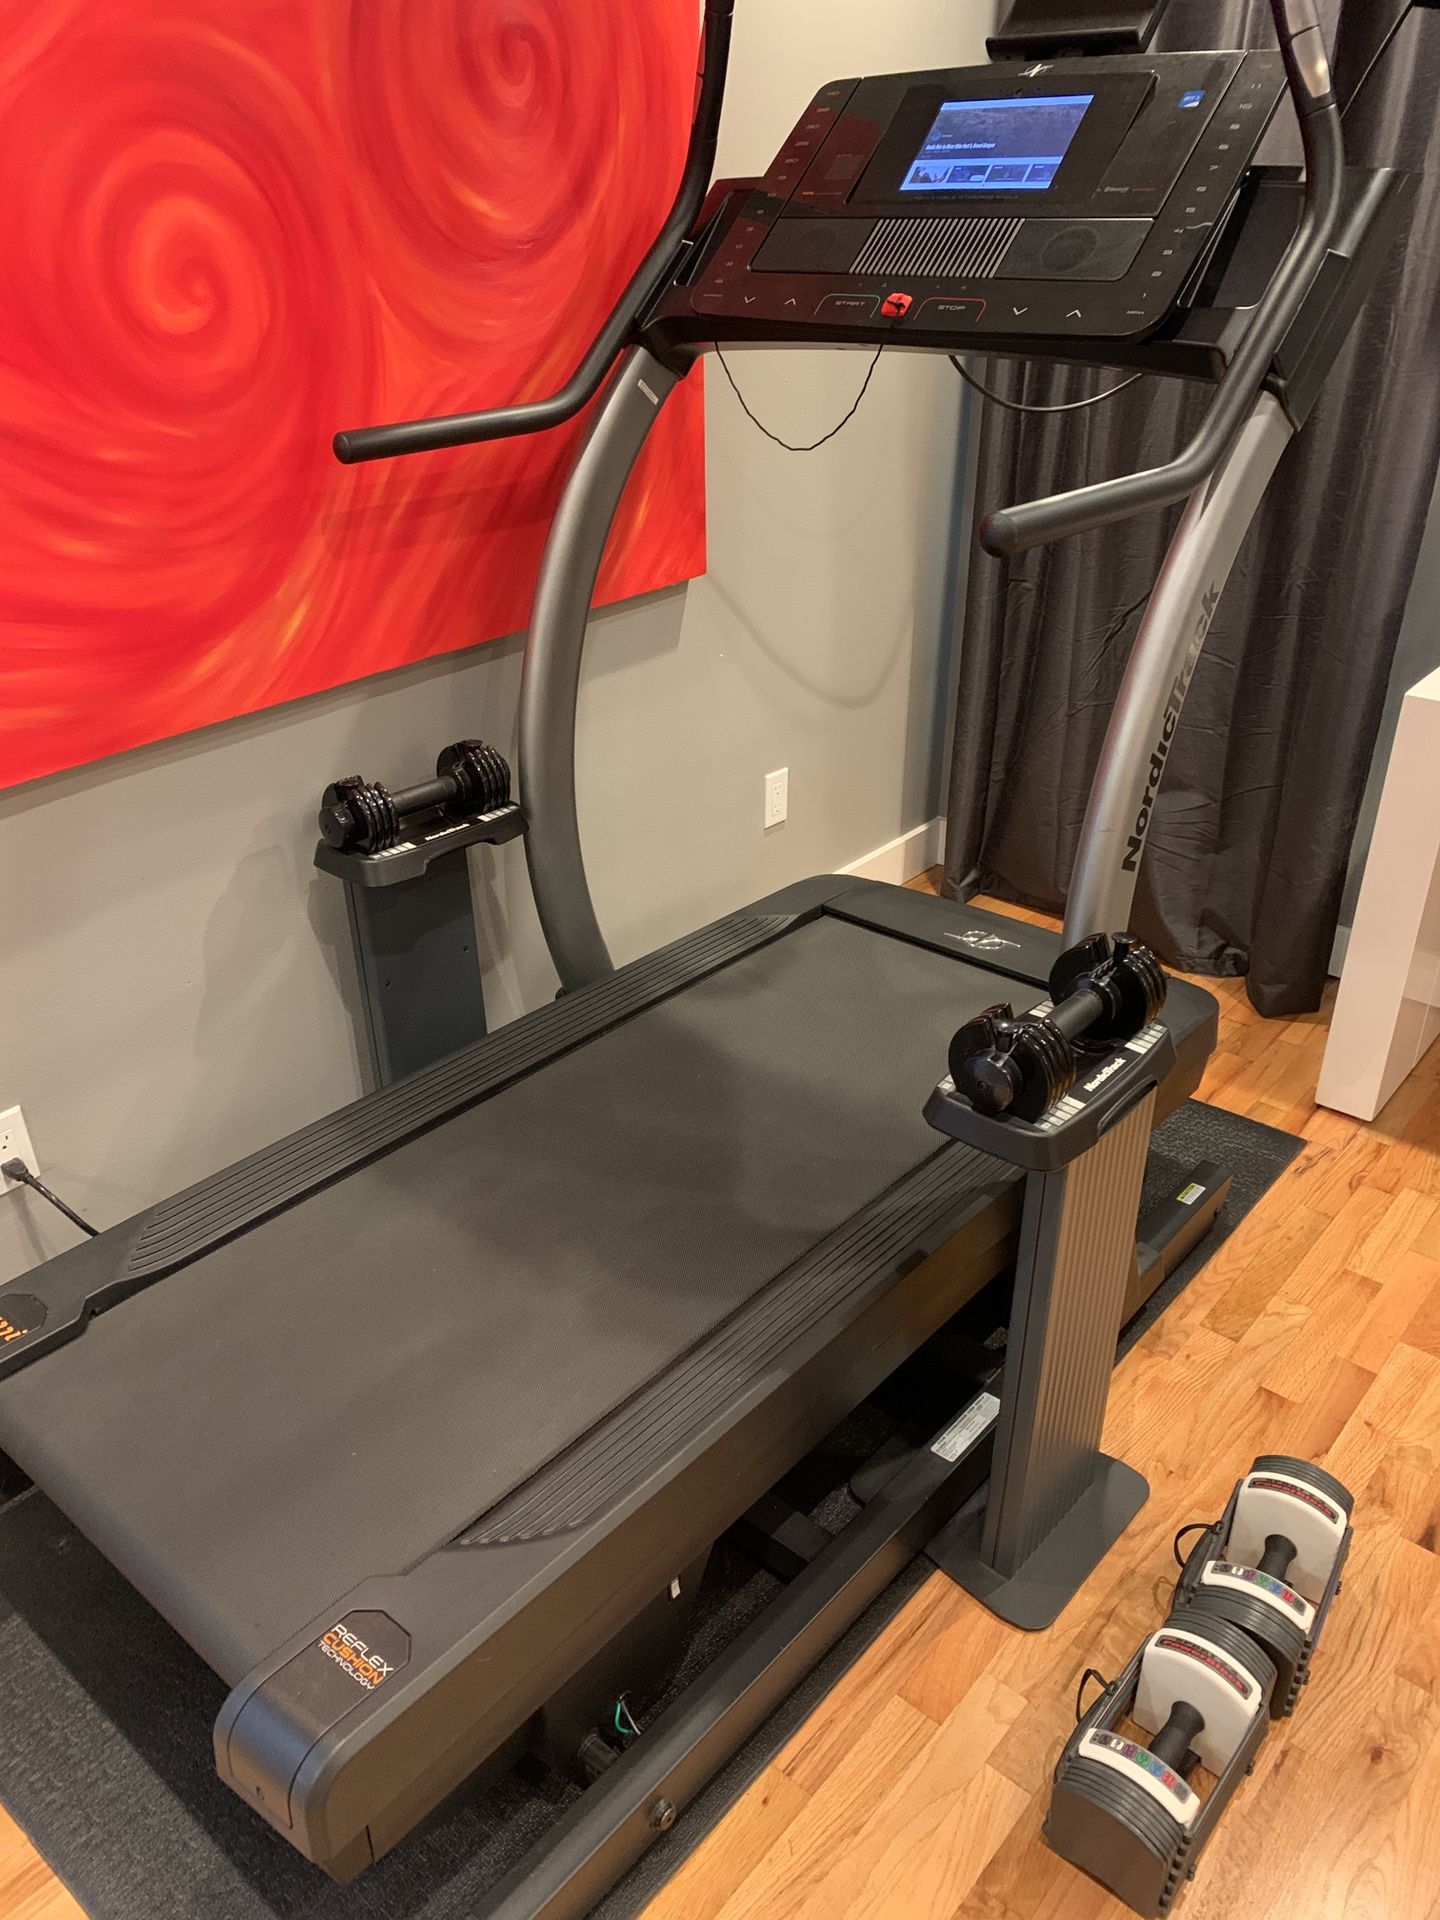 Nordictrack Incline Treadmill